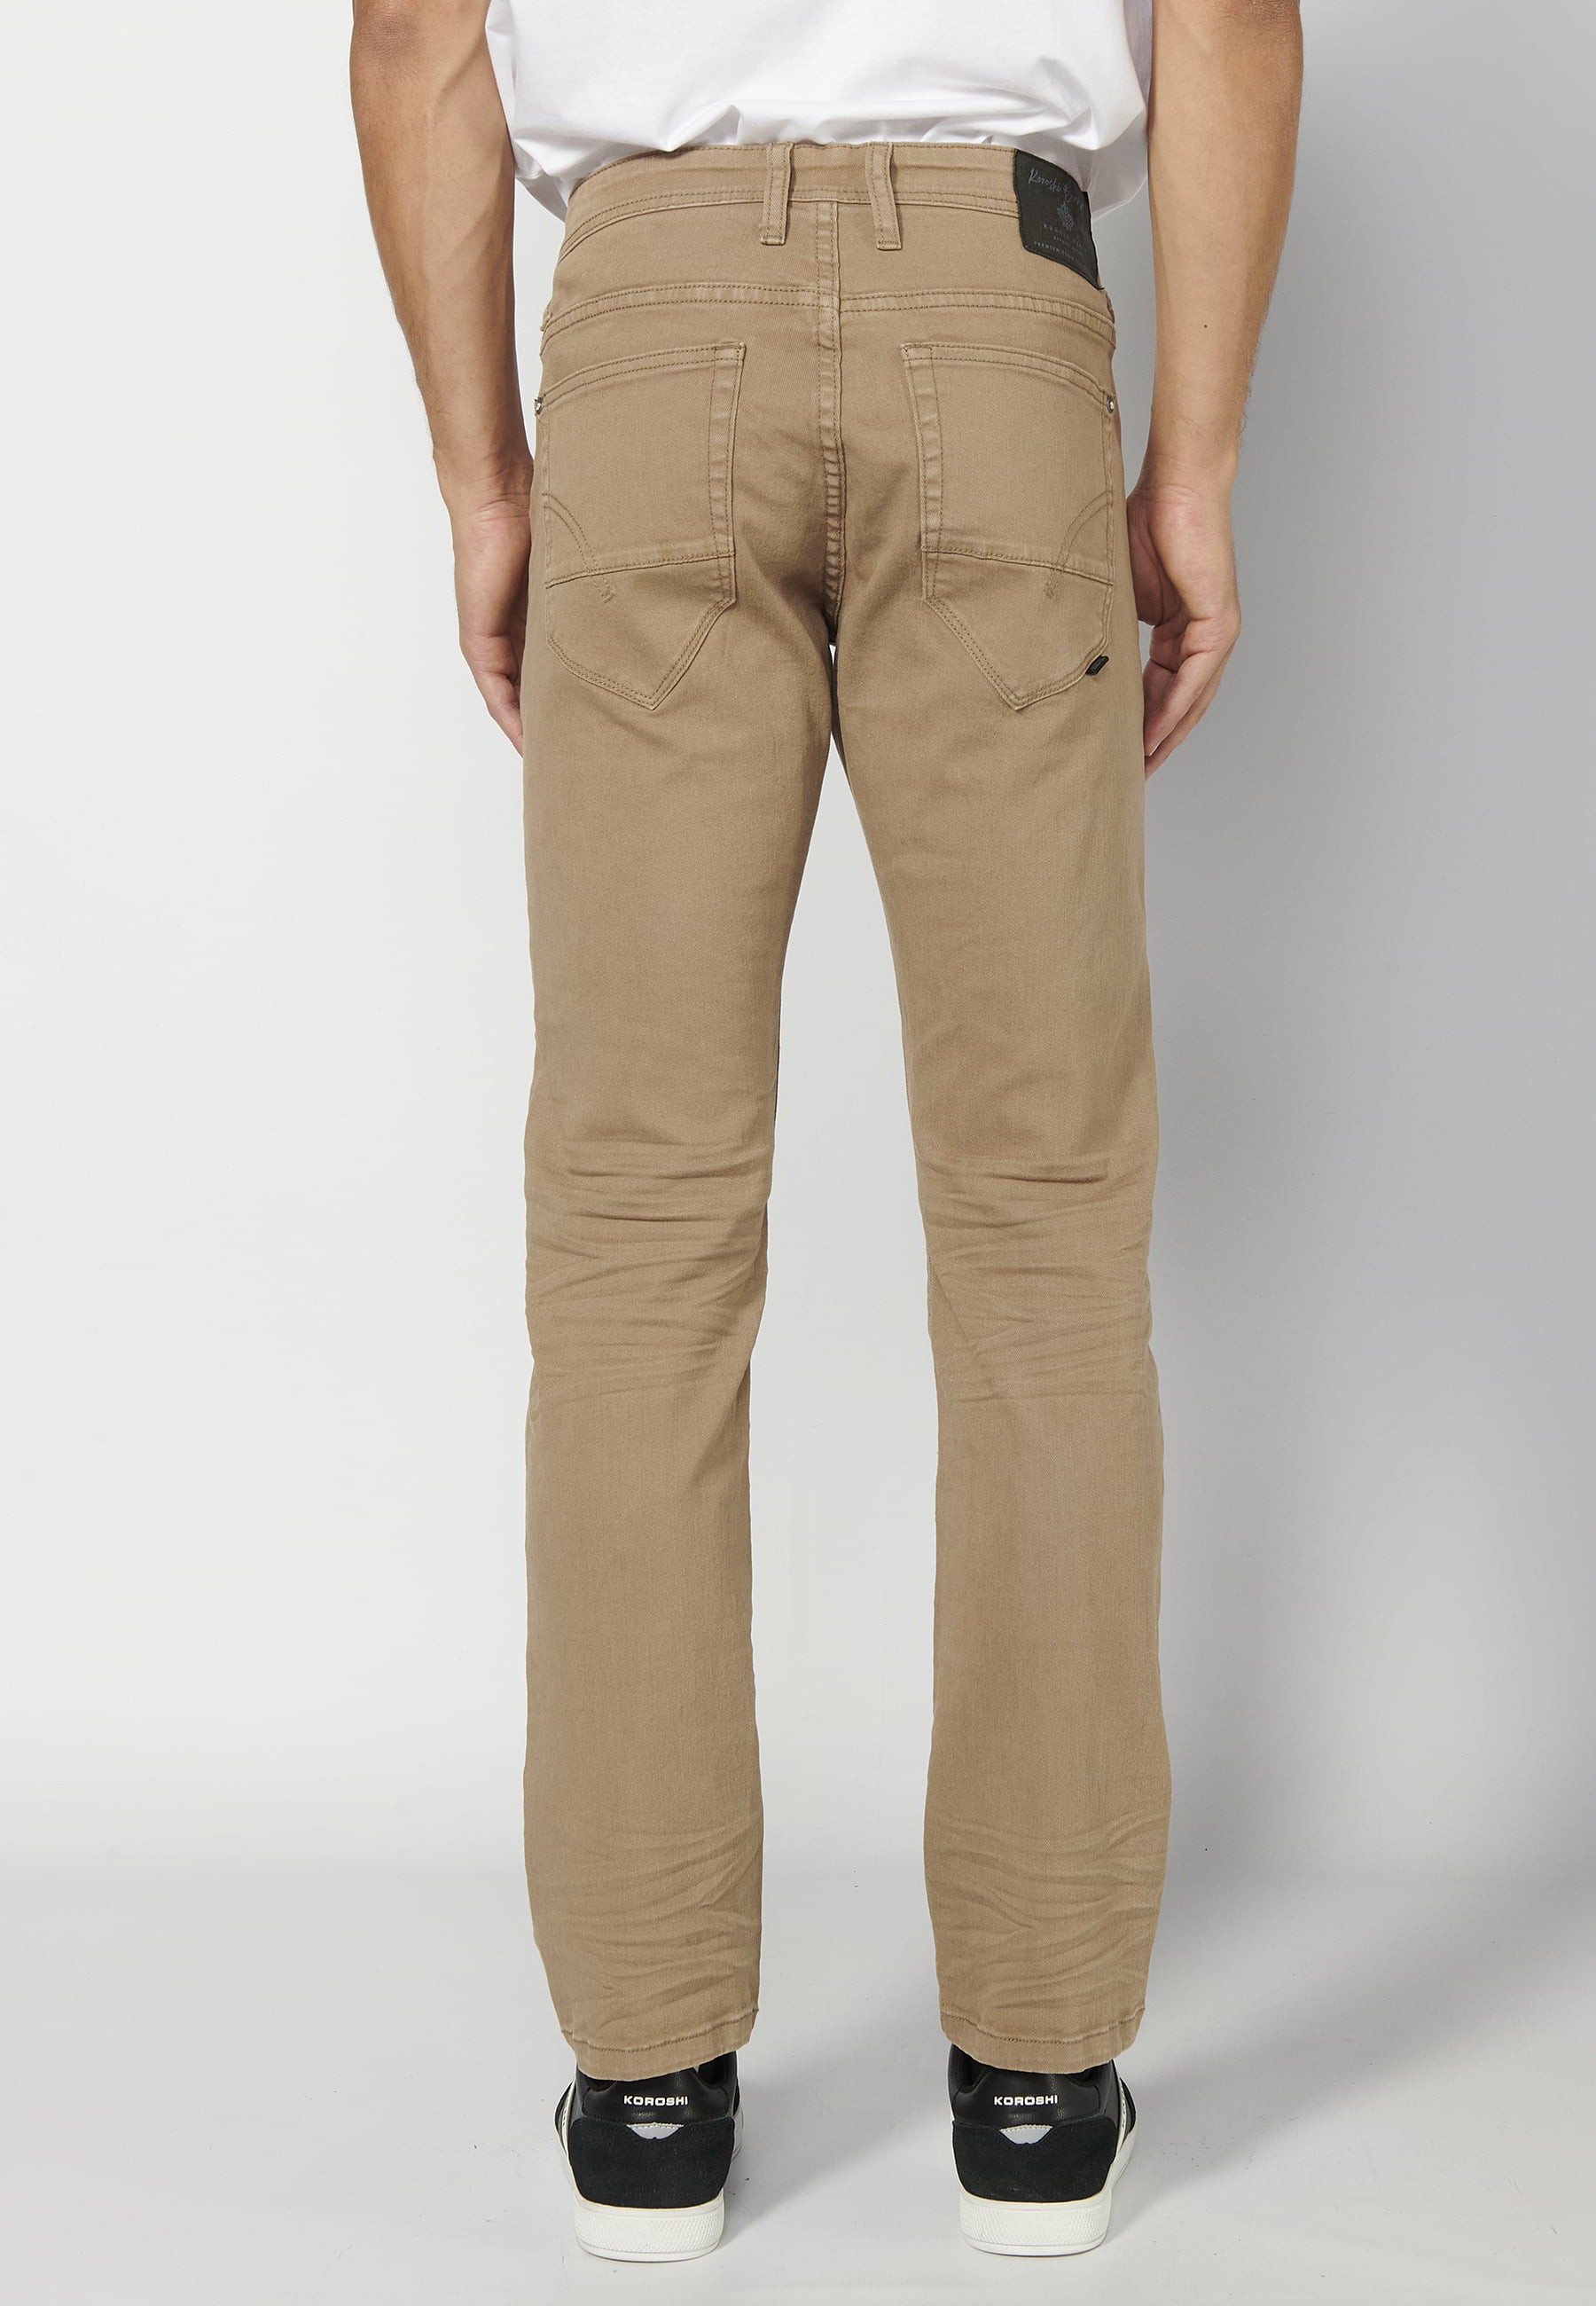 Regular fit stretch long pants, with five pockets, Beige color, for Men 2